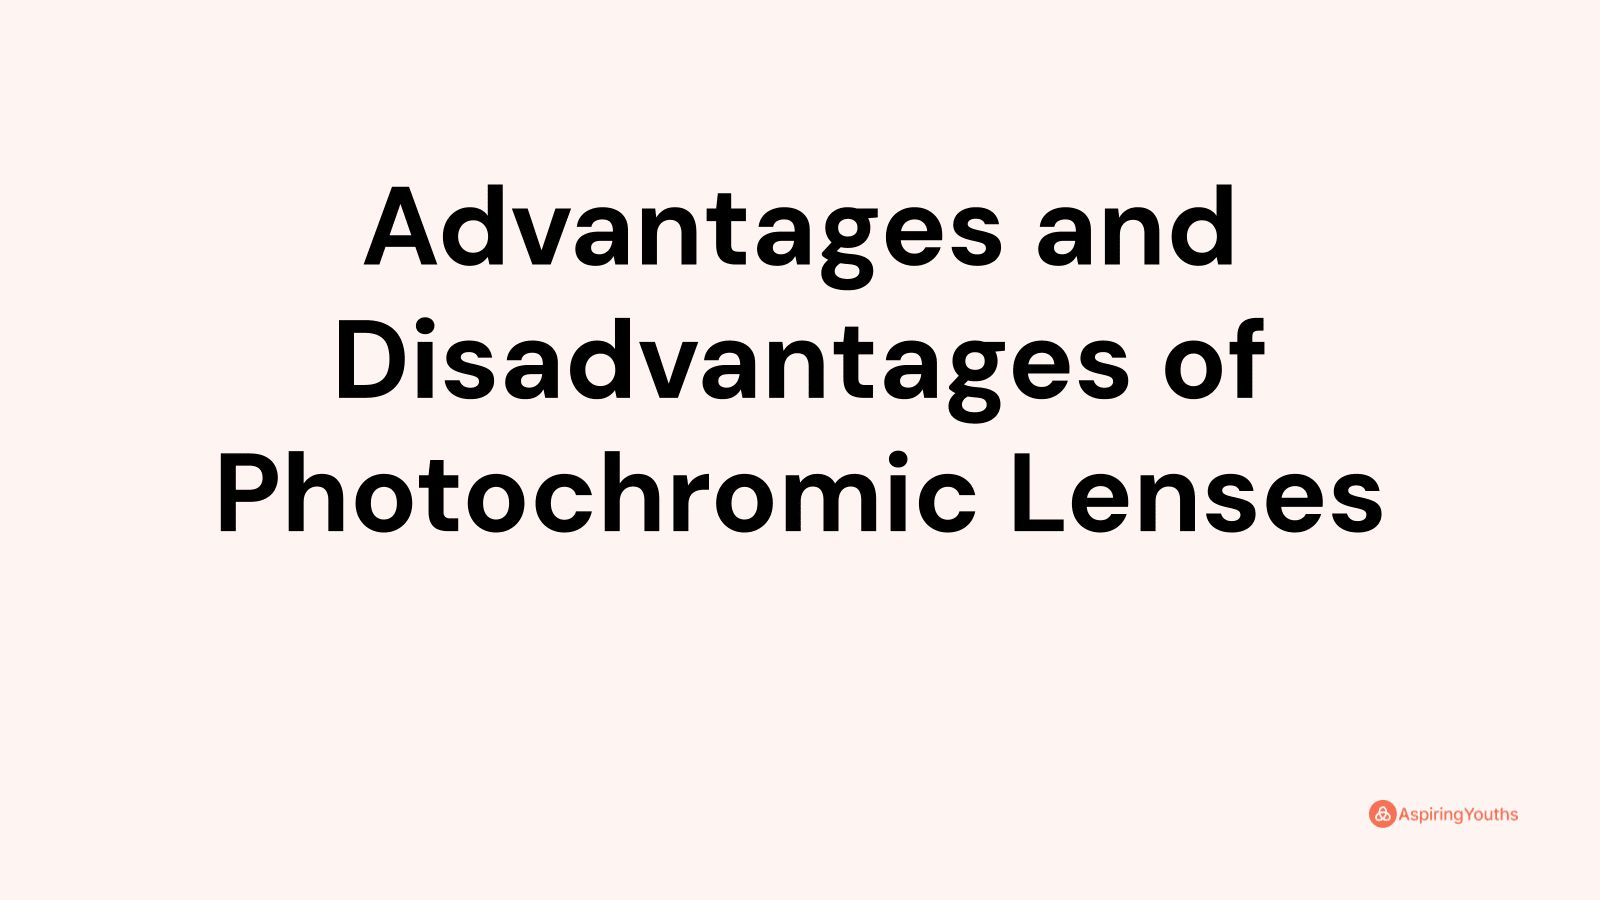 Advantages and disadvantages of Photochromic Lenses